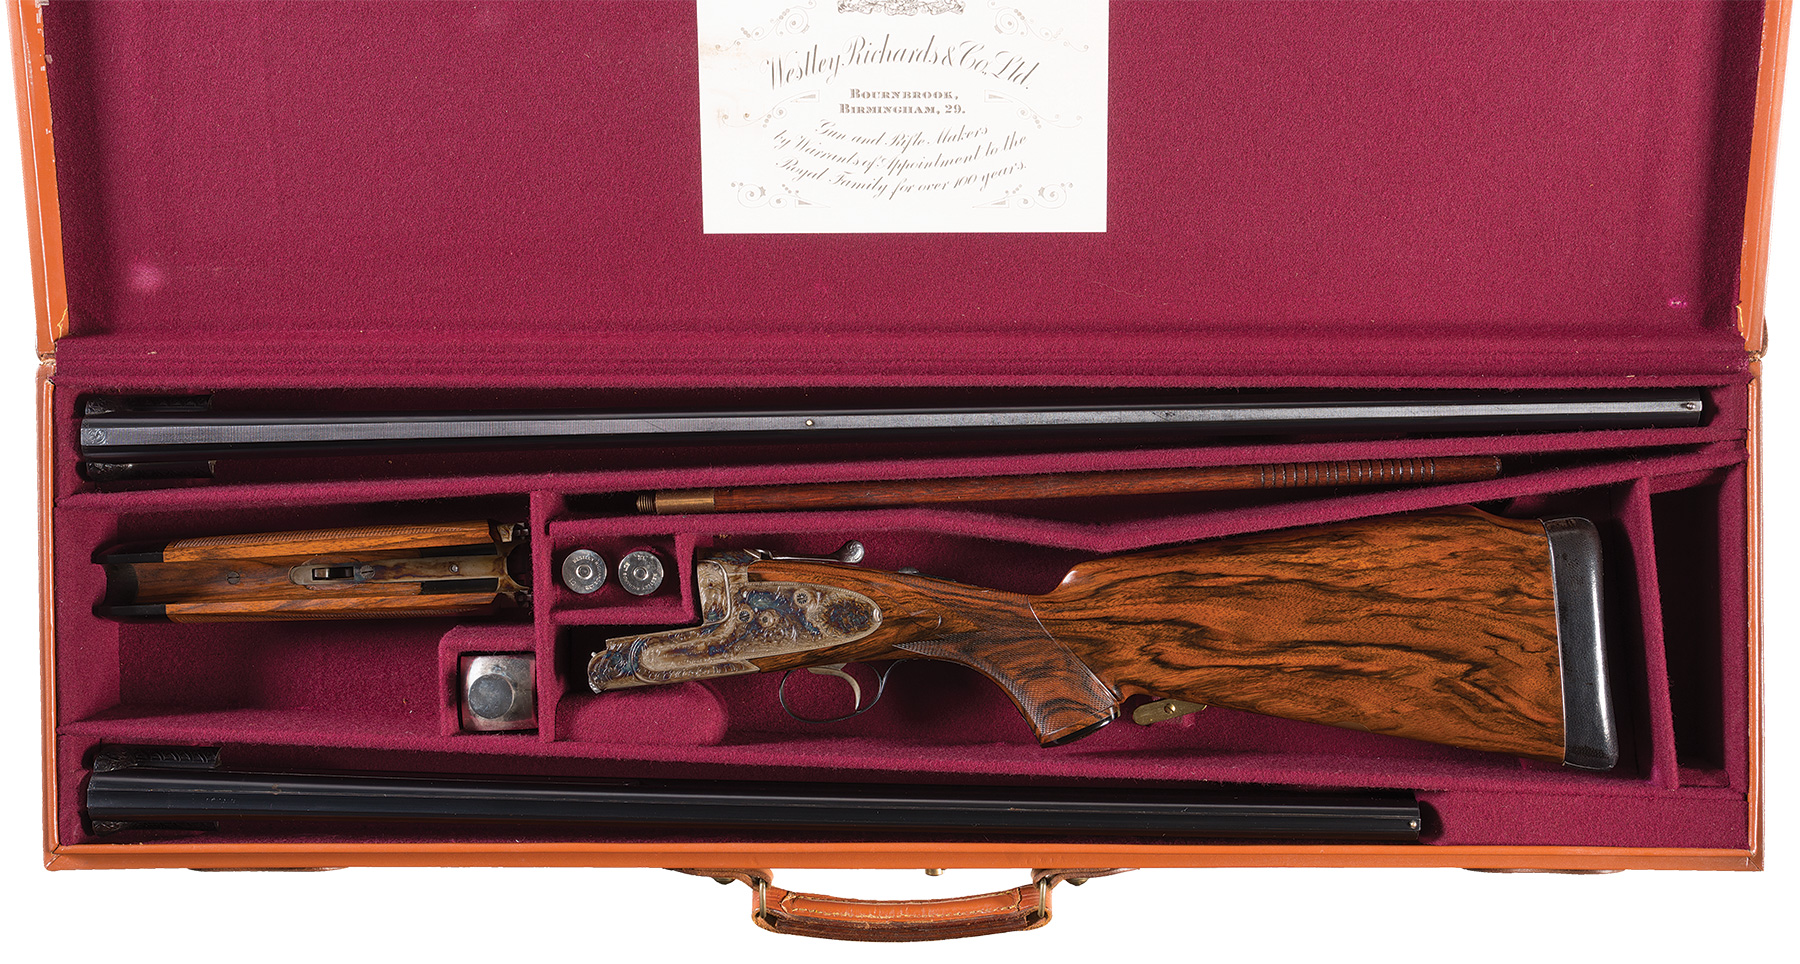 Cased Westley Richards "Ovundo" gun